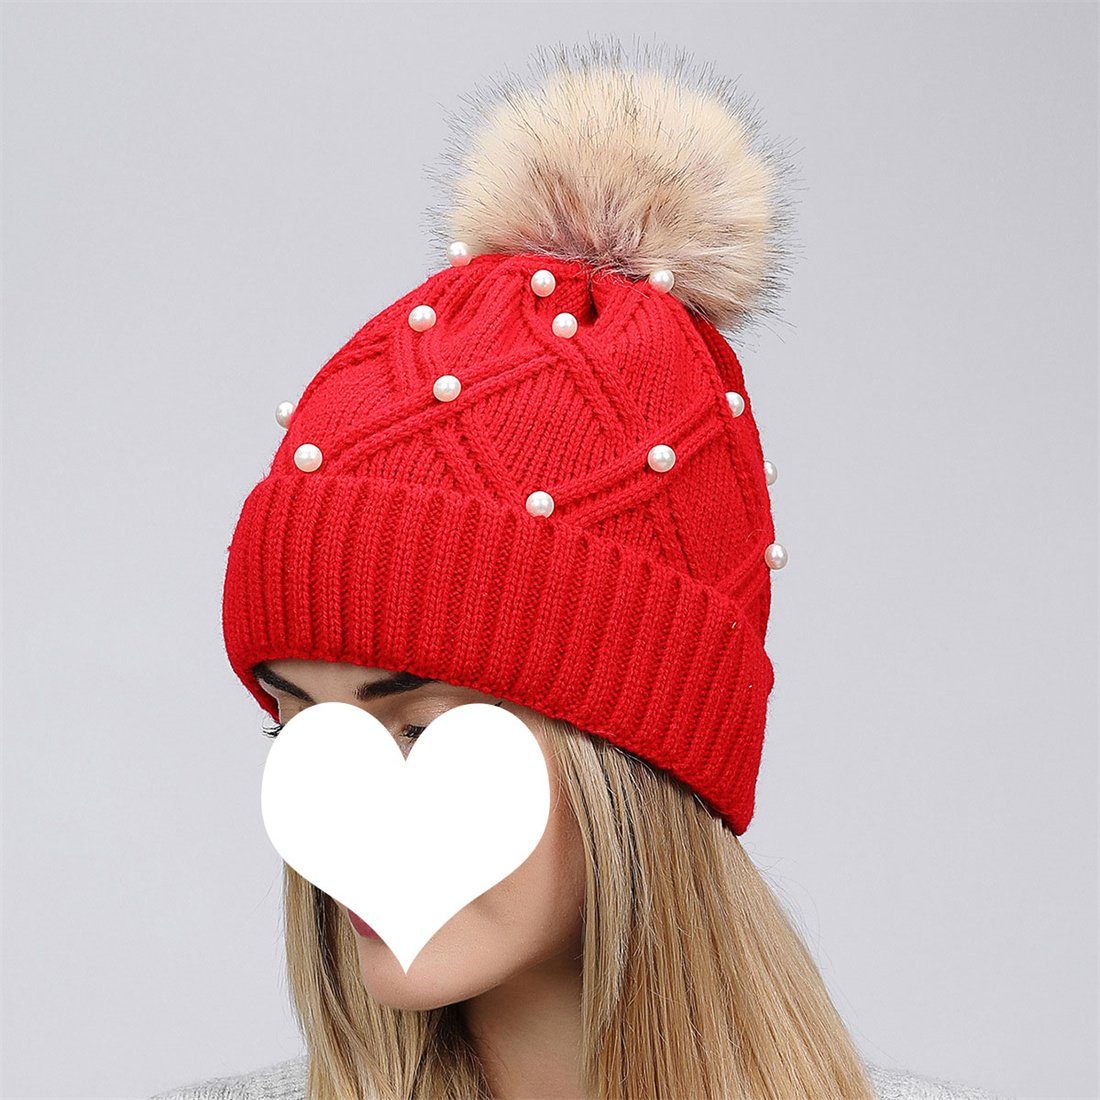 DÖRÖY Strickmütze Thickened Winter Knitted Cap Fashion Hairball Woolen Warm Rosa Women's Cap